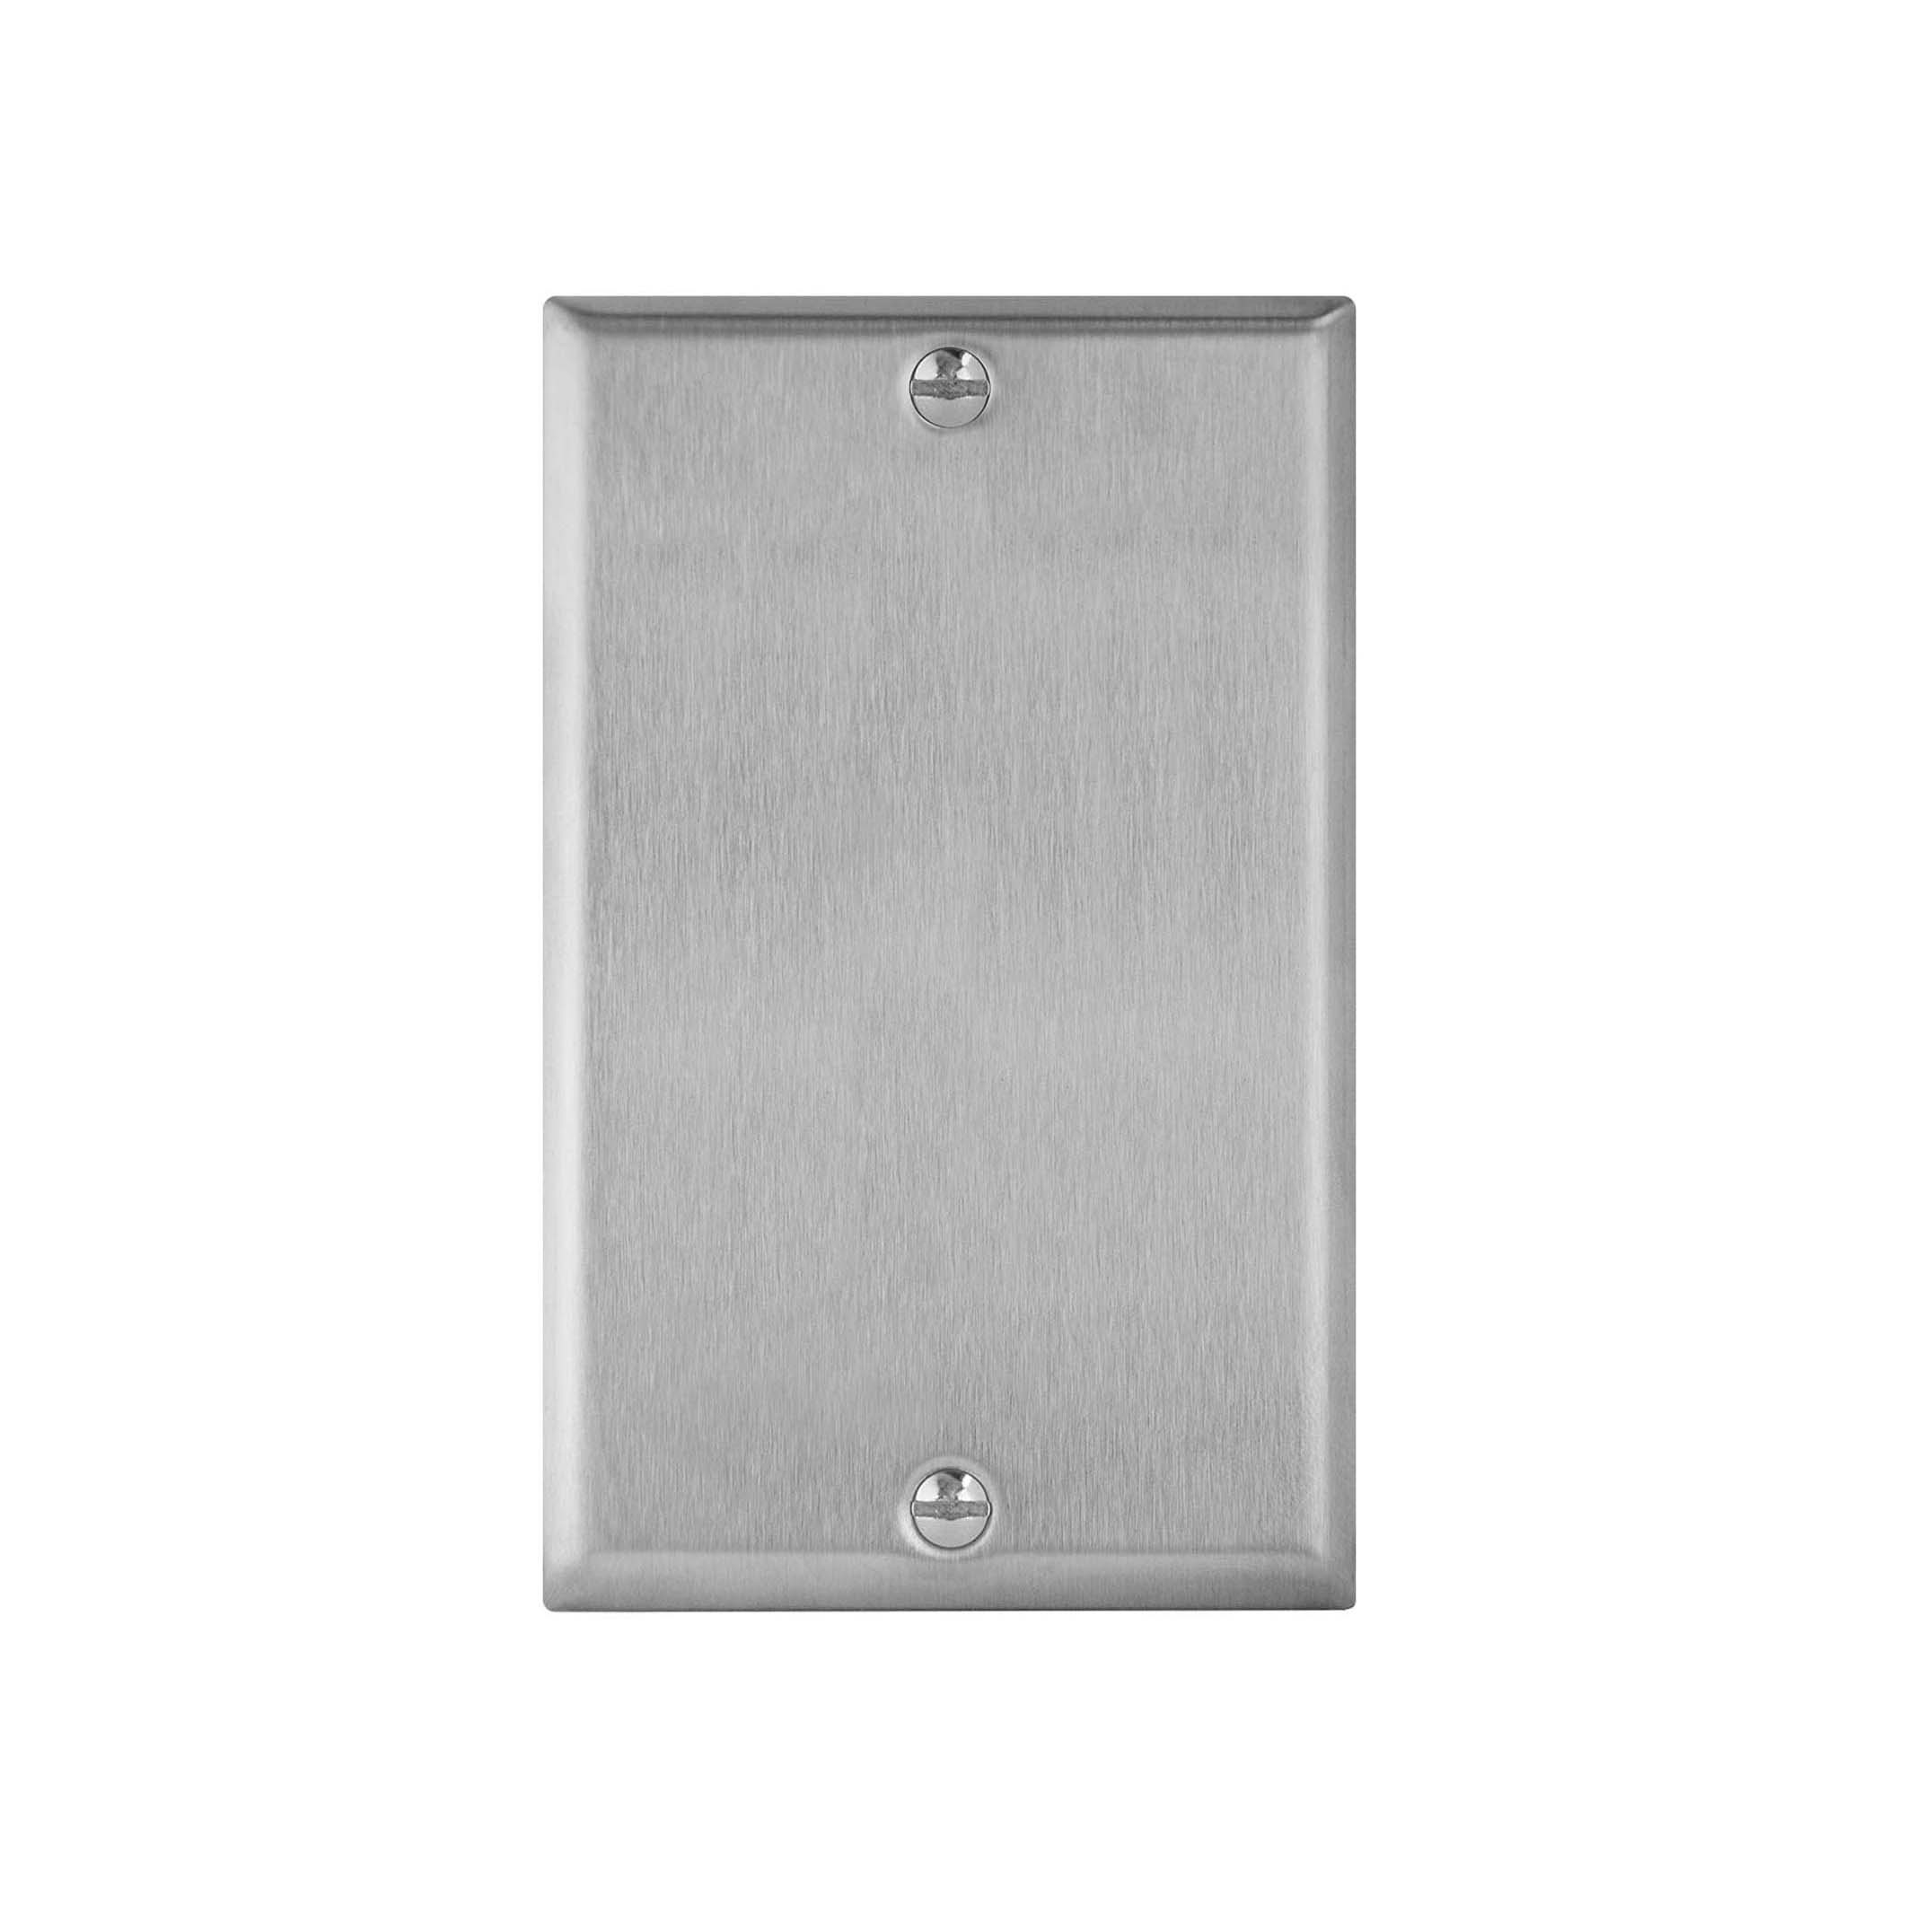 Blank Stainless Steel Wallplates WP1101